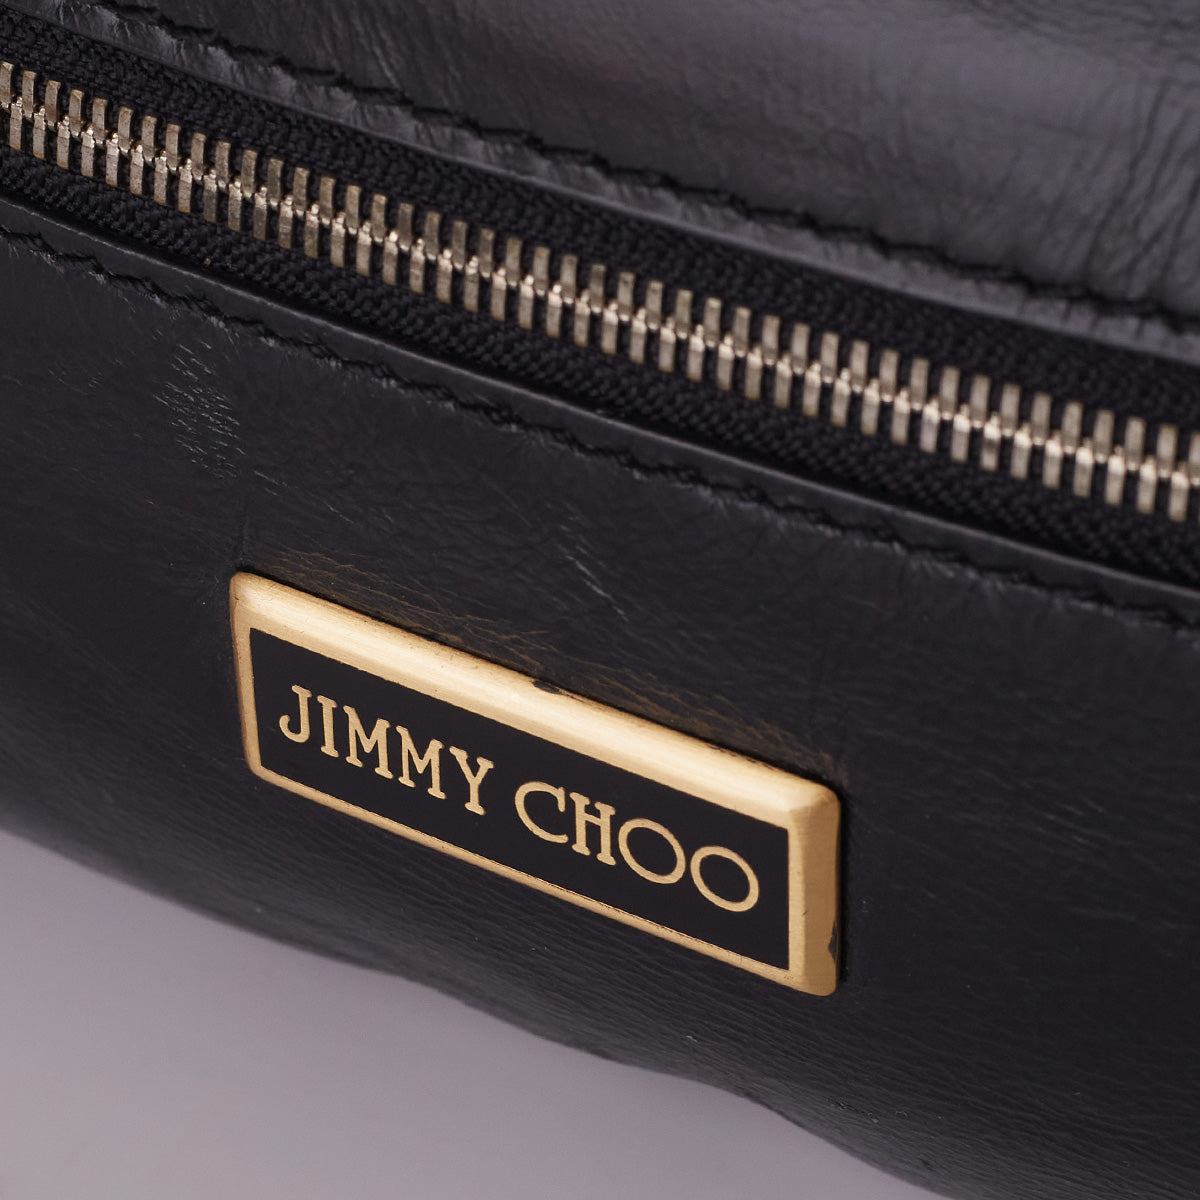 Bolsa Jimmy Choo Solid Large Preta